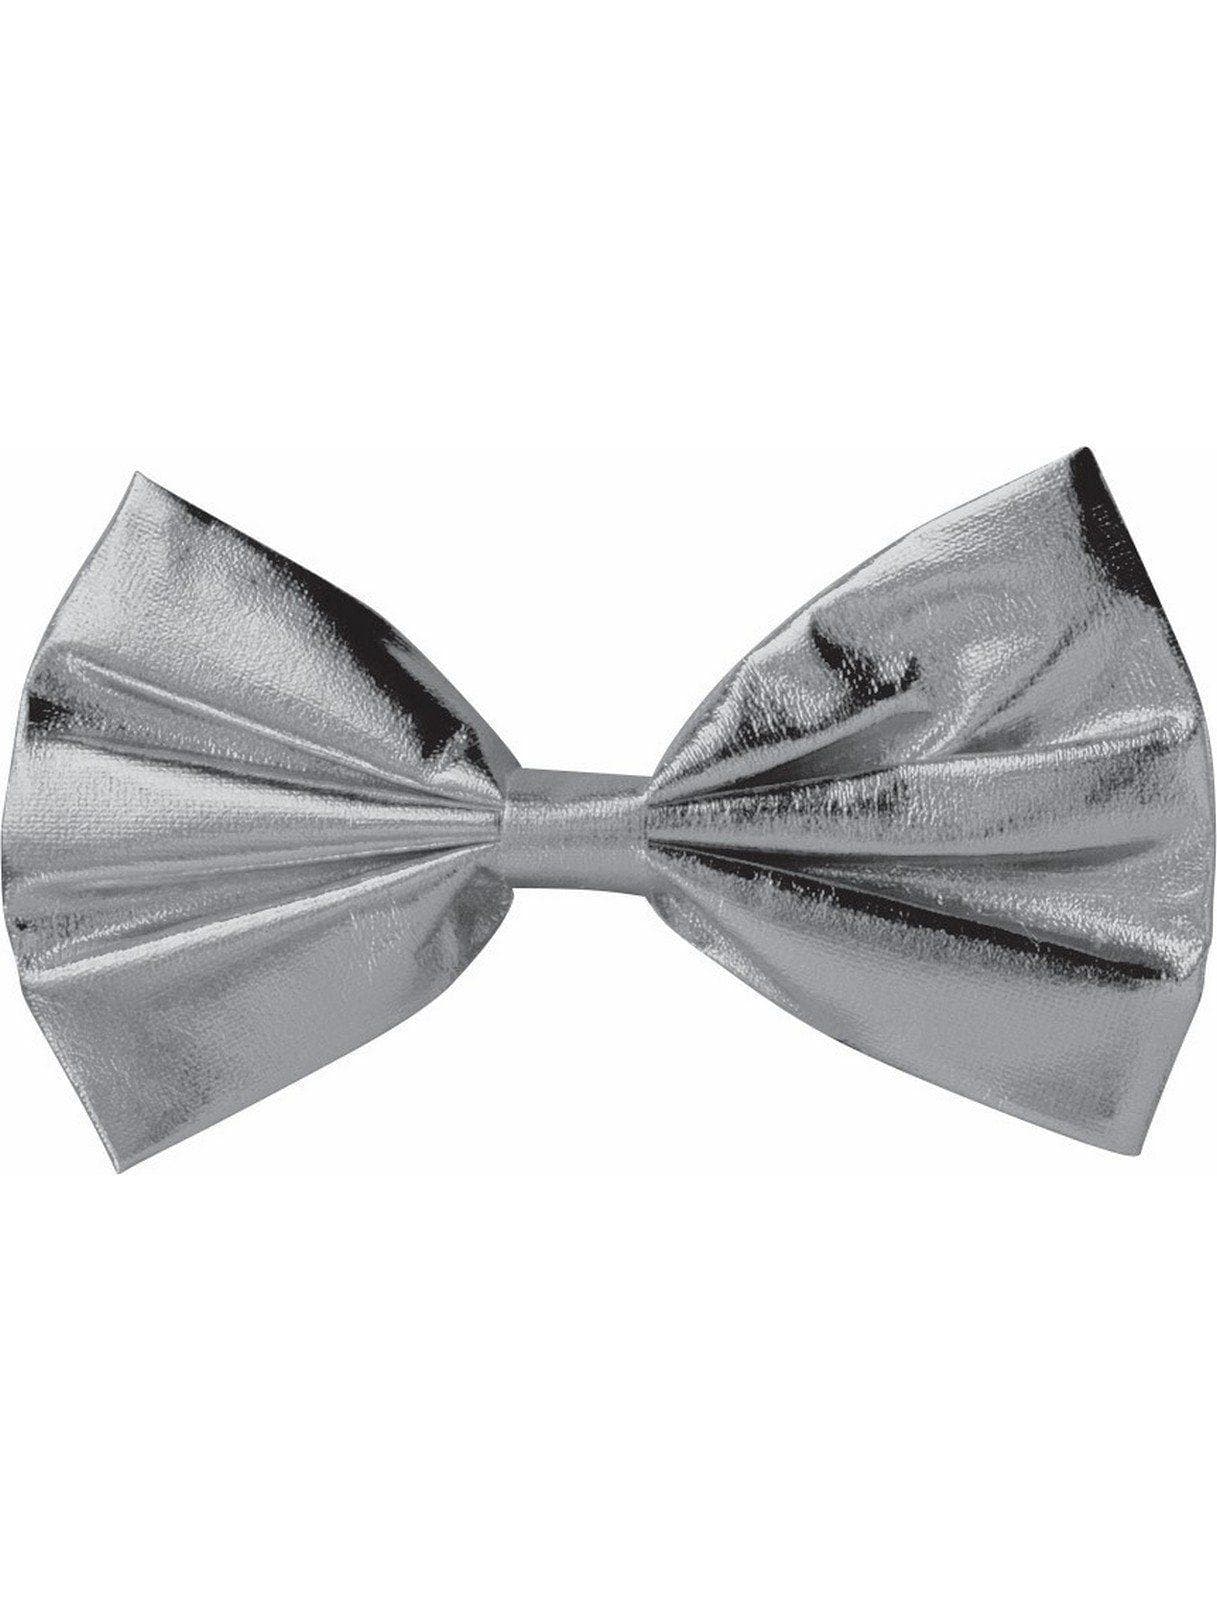 Bow Tie - Silver - costumes.com